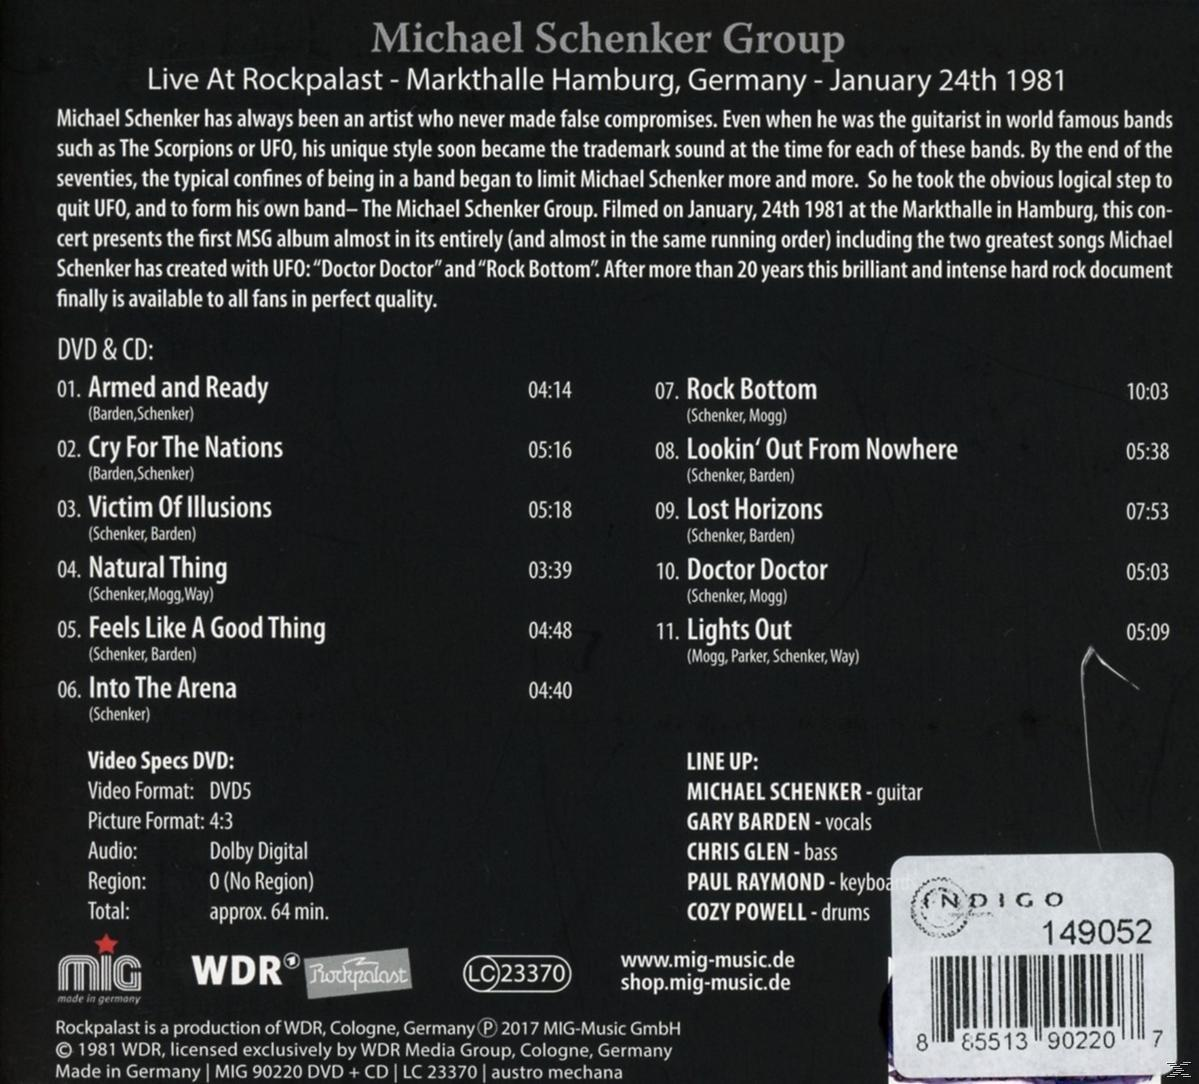 Group At Michael Rockpalast-Hamburg DVD Video) Schenker (CD Live - 1981 + -